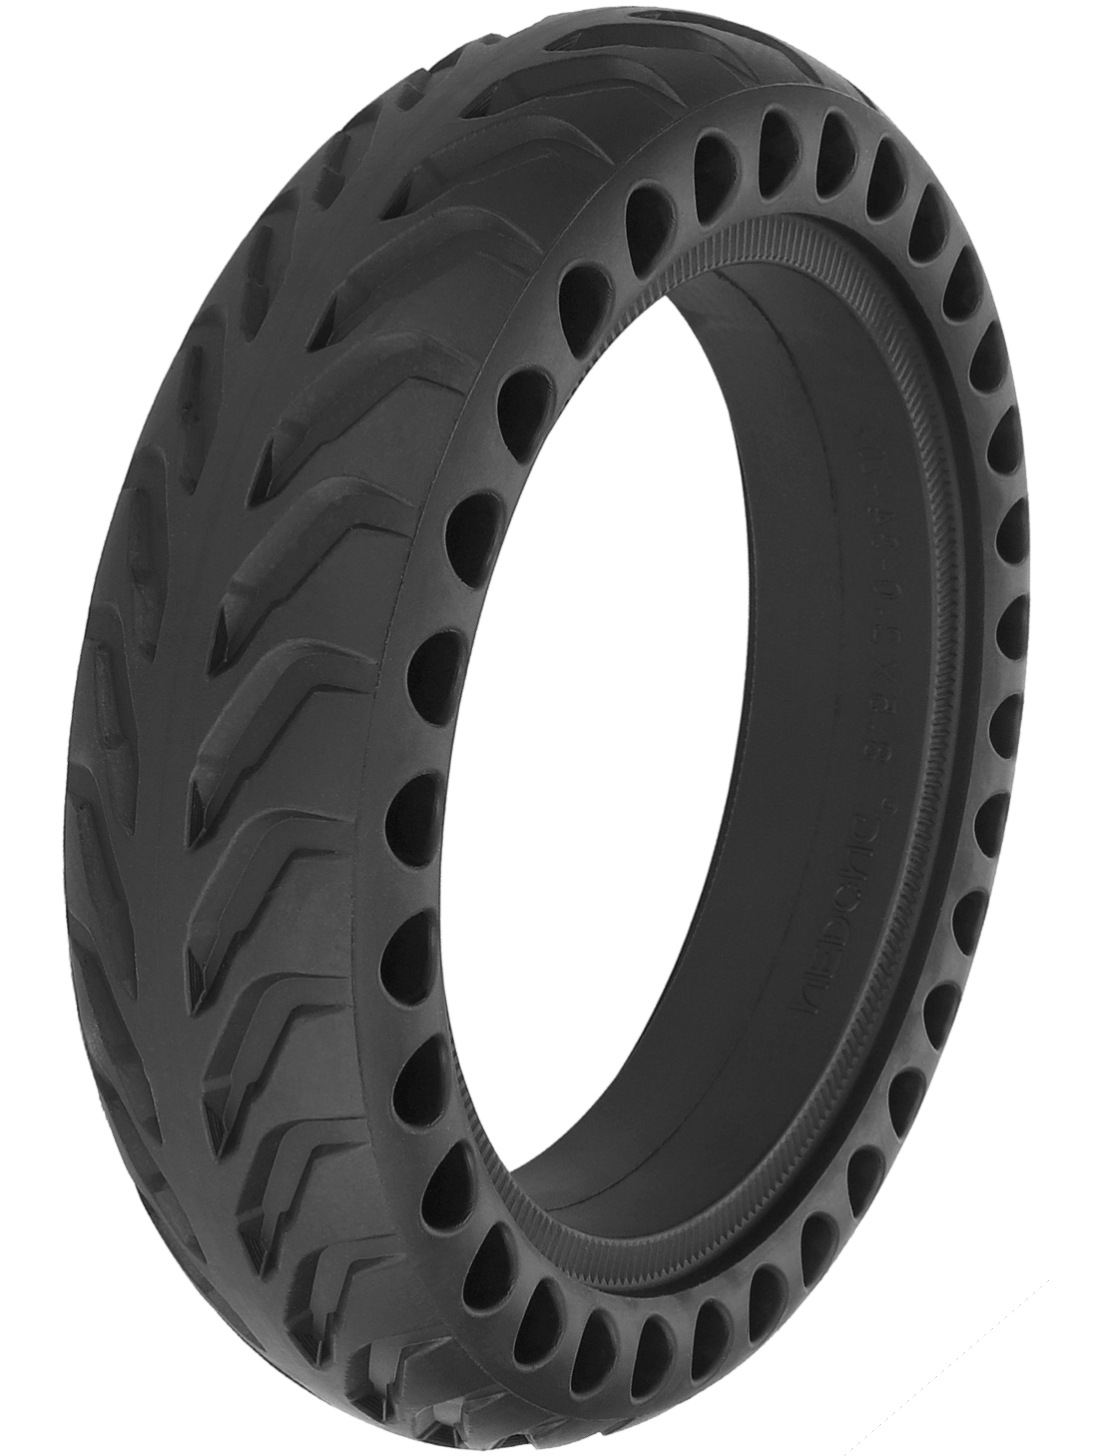 50/75-6.1 (8 1/2 x 2) Flat-Free Airless Tire